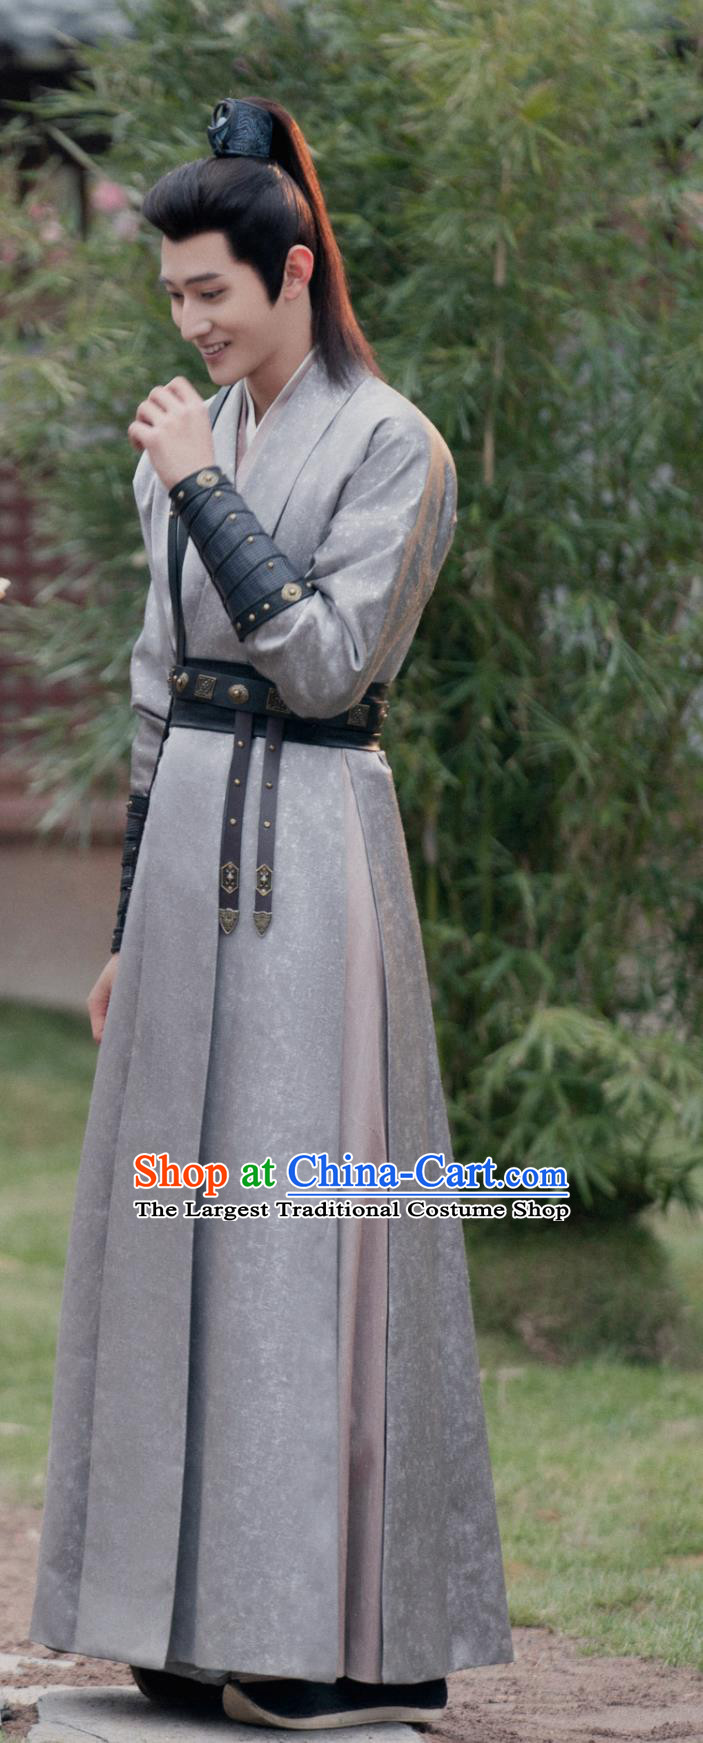 China Ancient Young Hero Garment Costumes TV Drama The Legend of Zhuohua Bodyguard Zhi Mo Grey Outfit